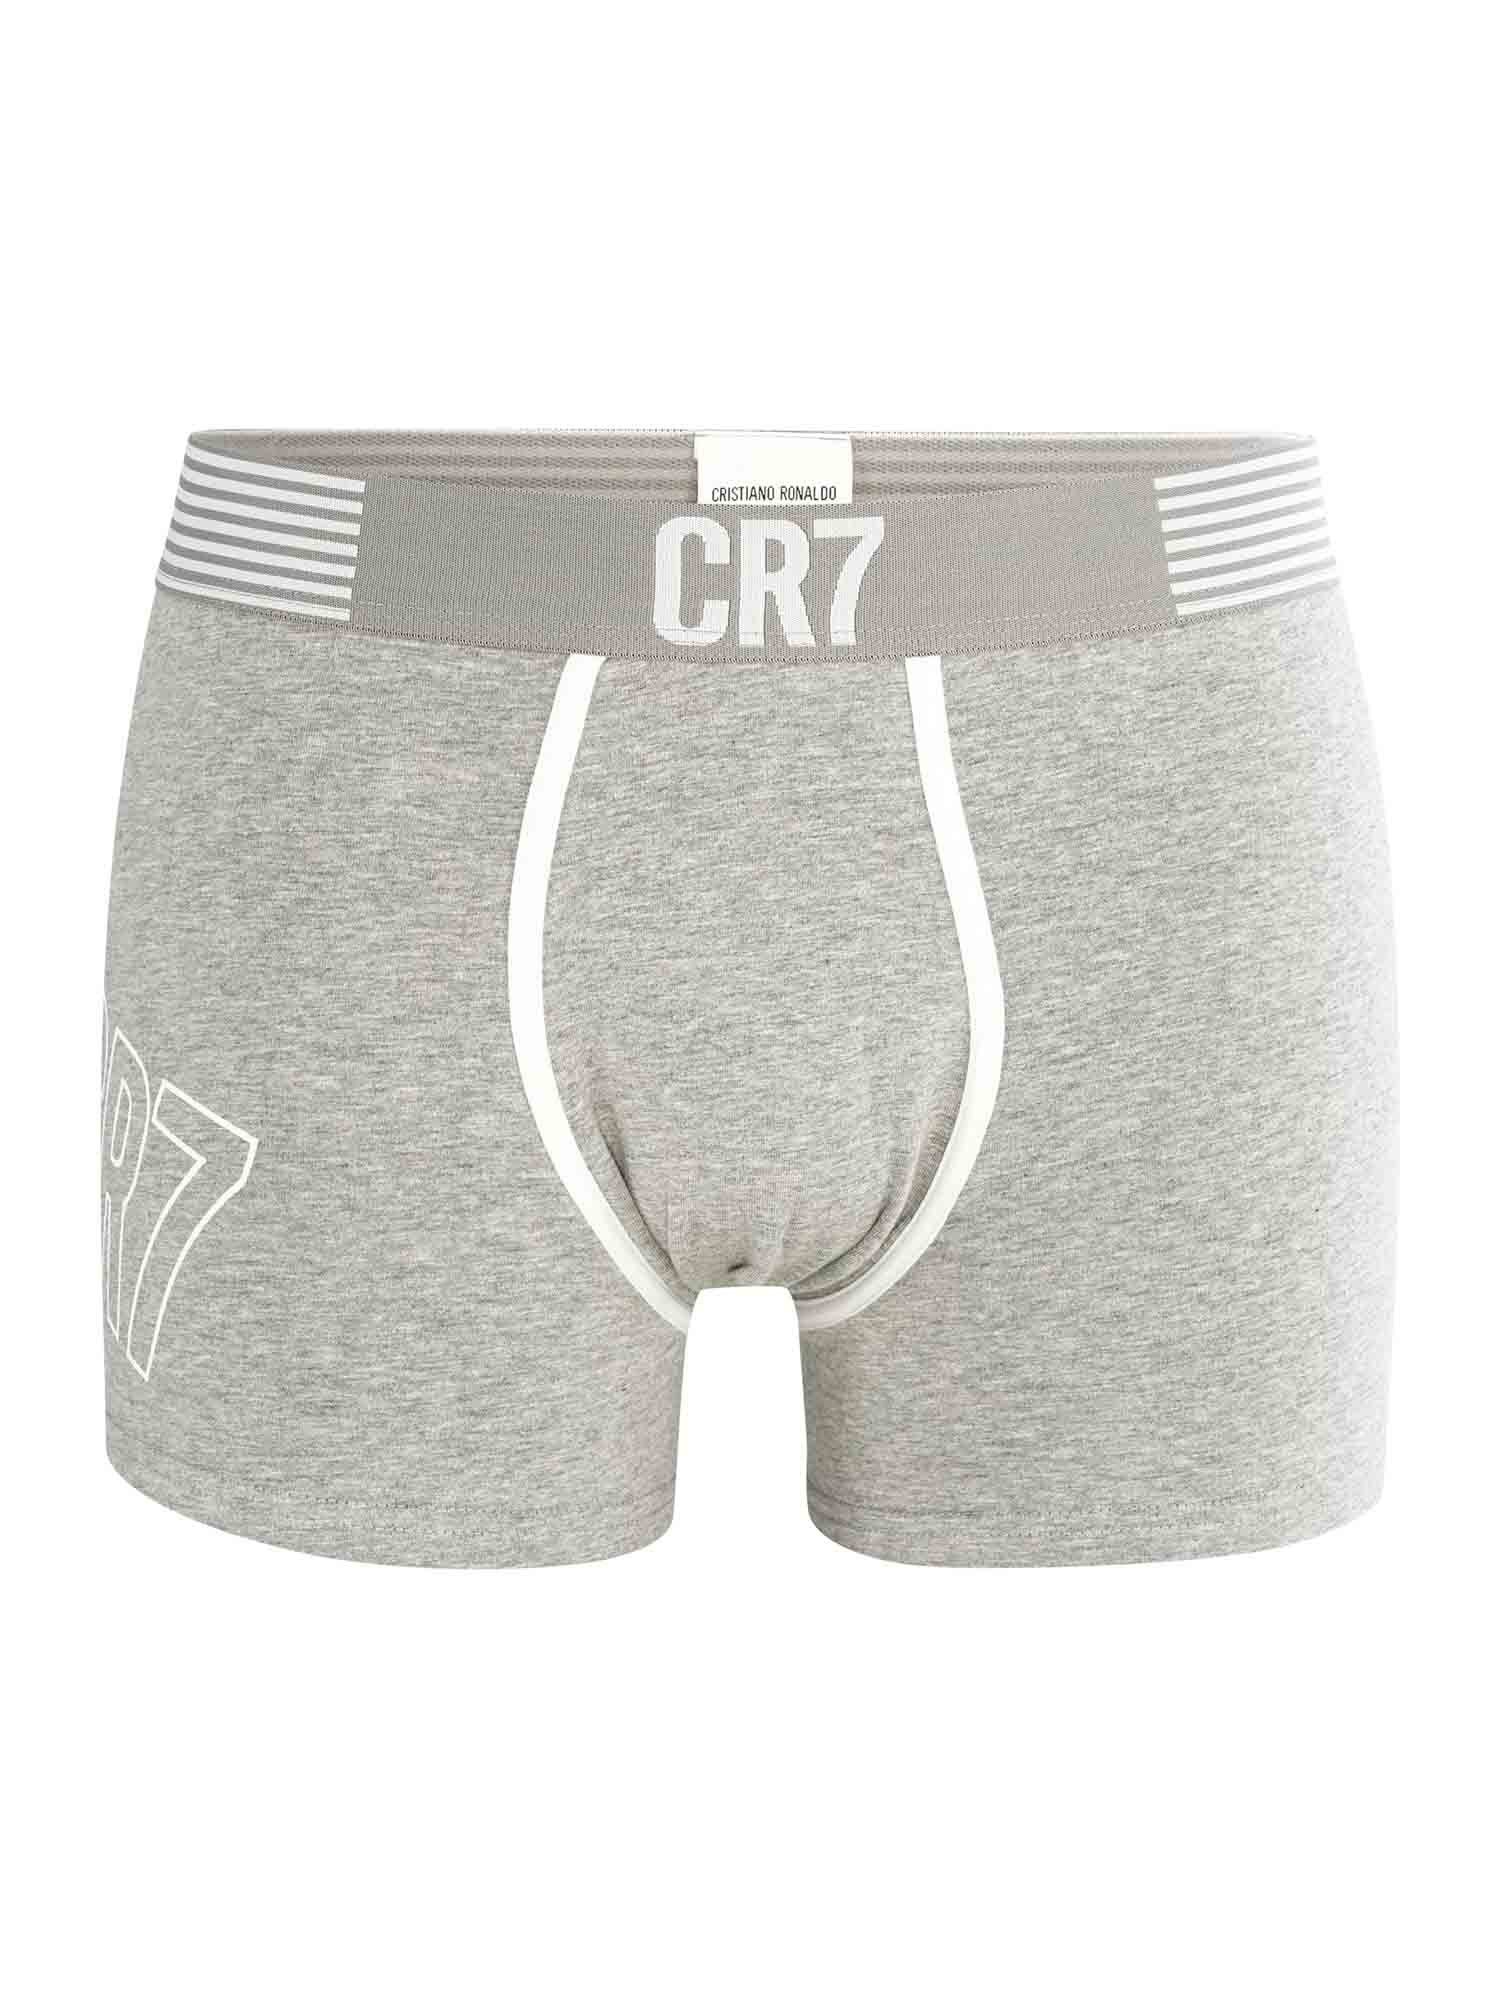 Multi (2-St) 10 Retro Retro Boxershorts CR7 Multipack Herren Pants Trunks Männer Pants